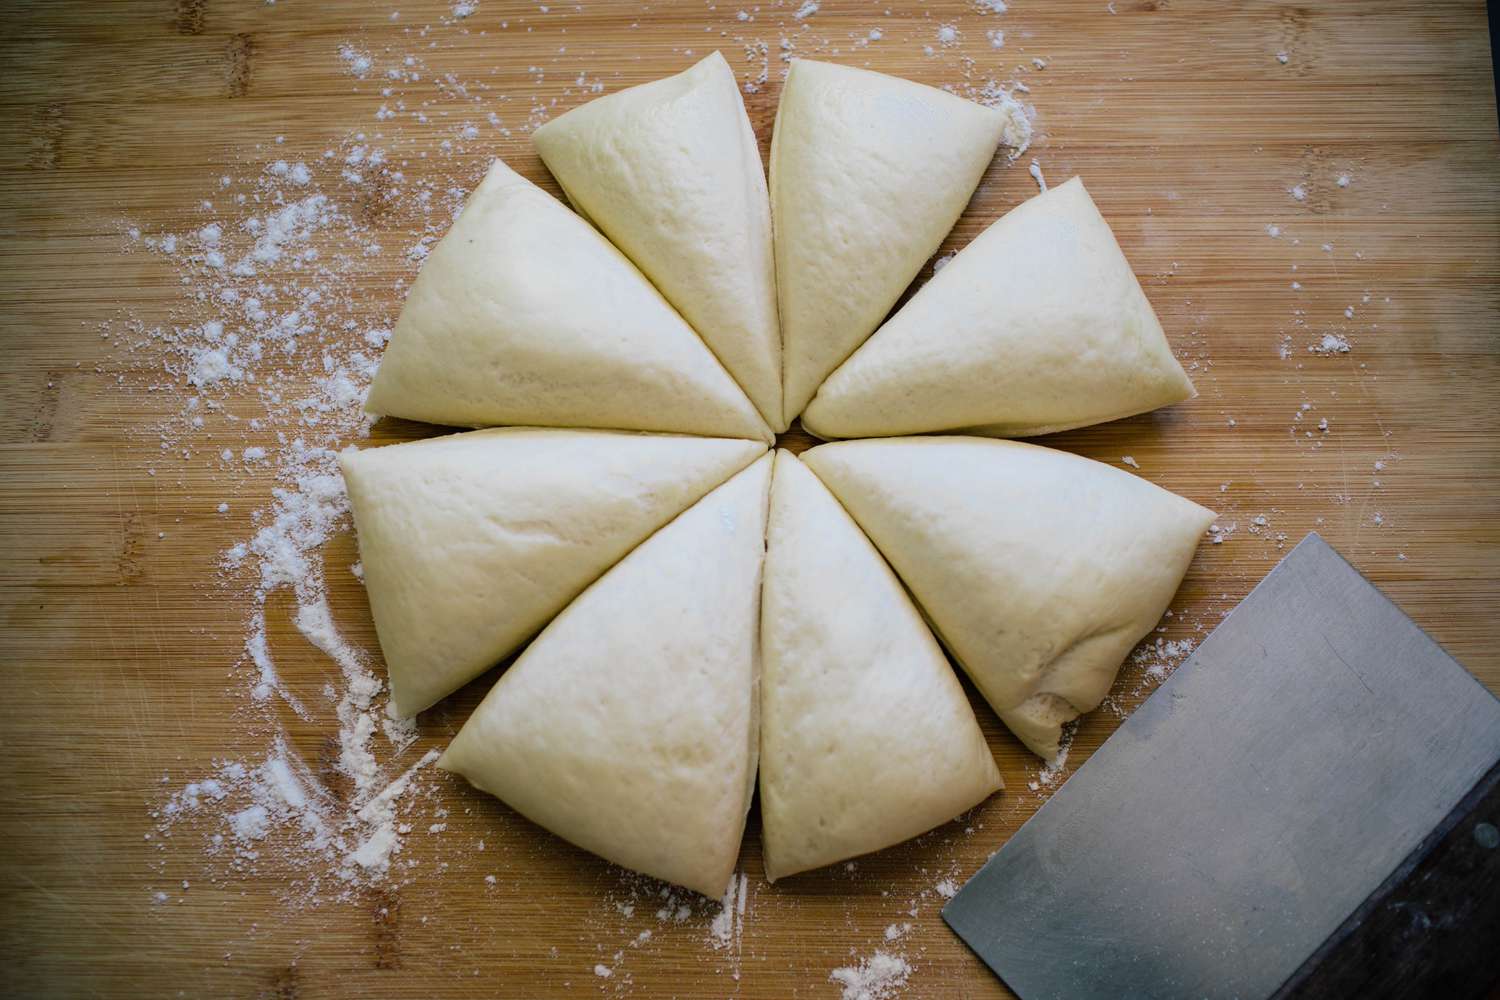 Divide dough into 8 pieces